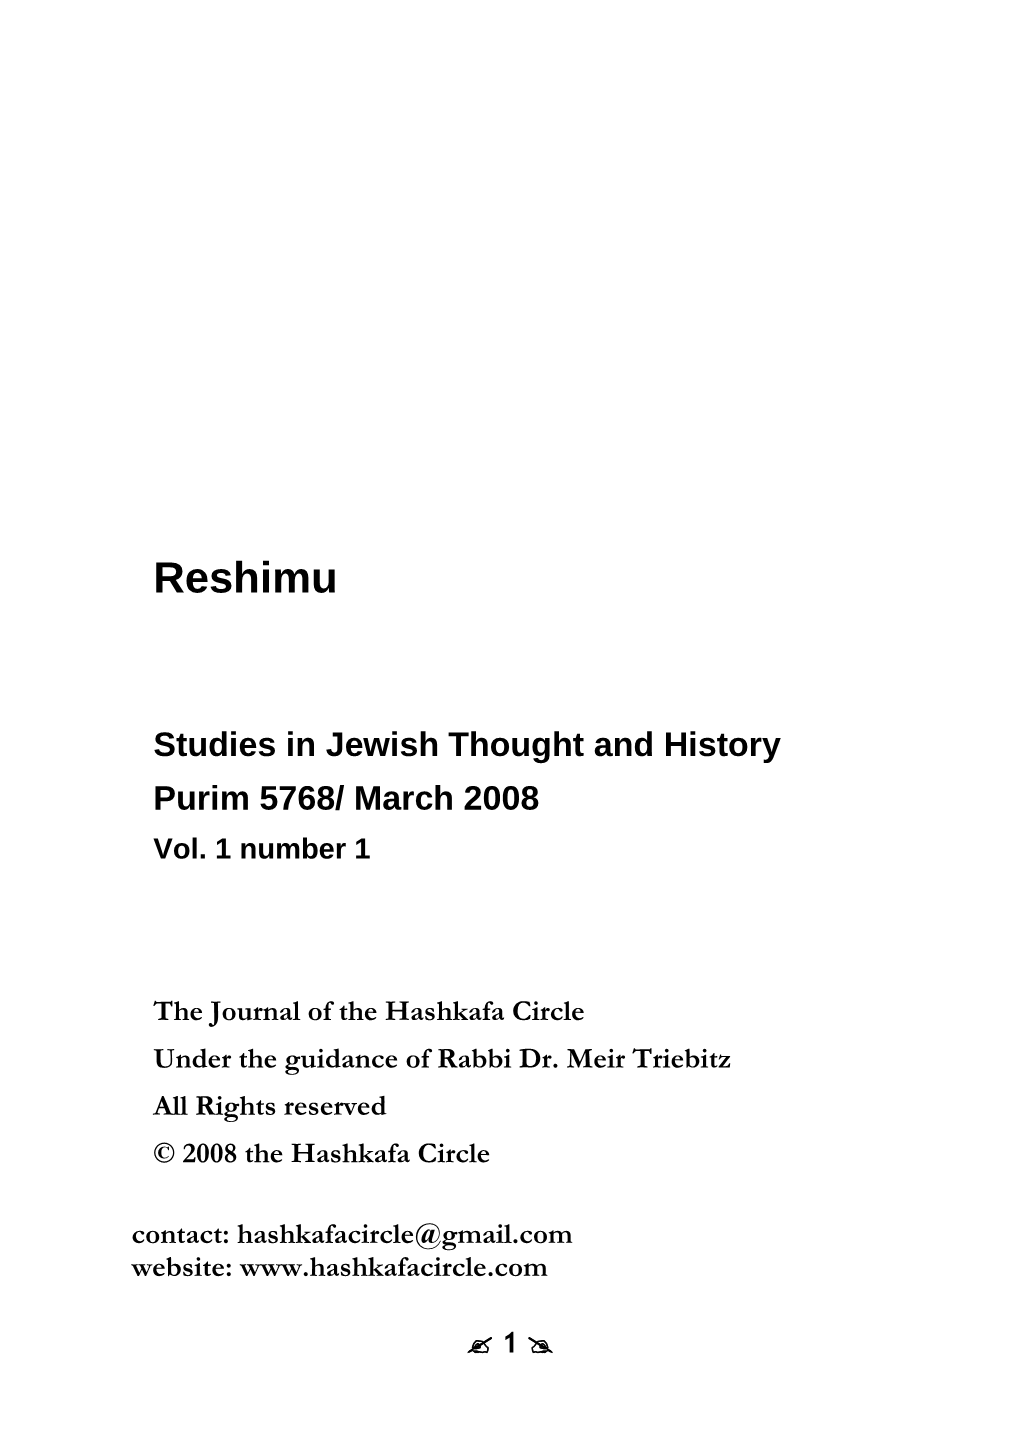 Reshimu 1 (Whole Journal)